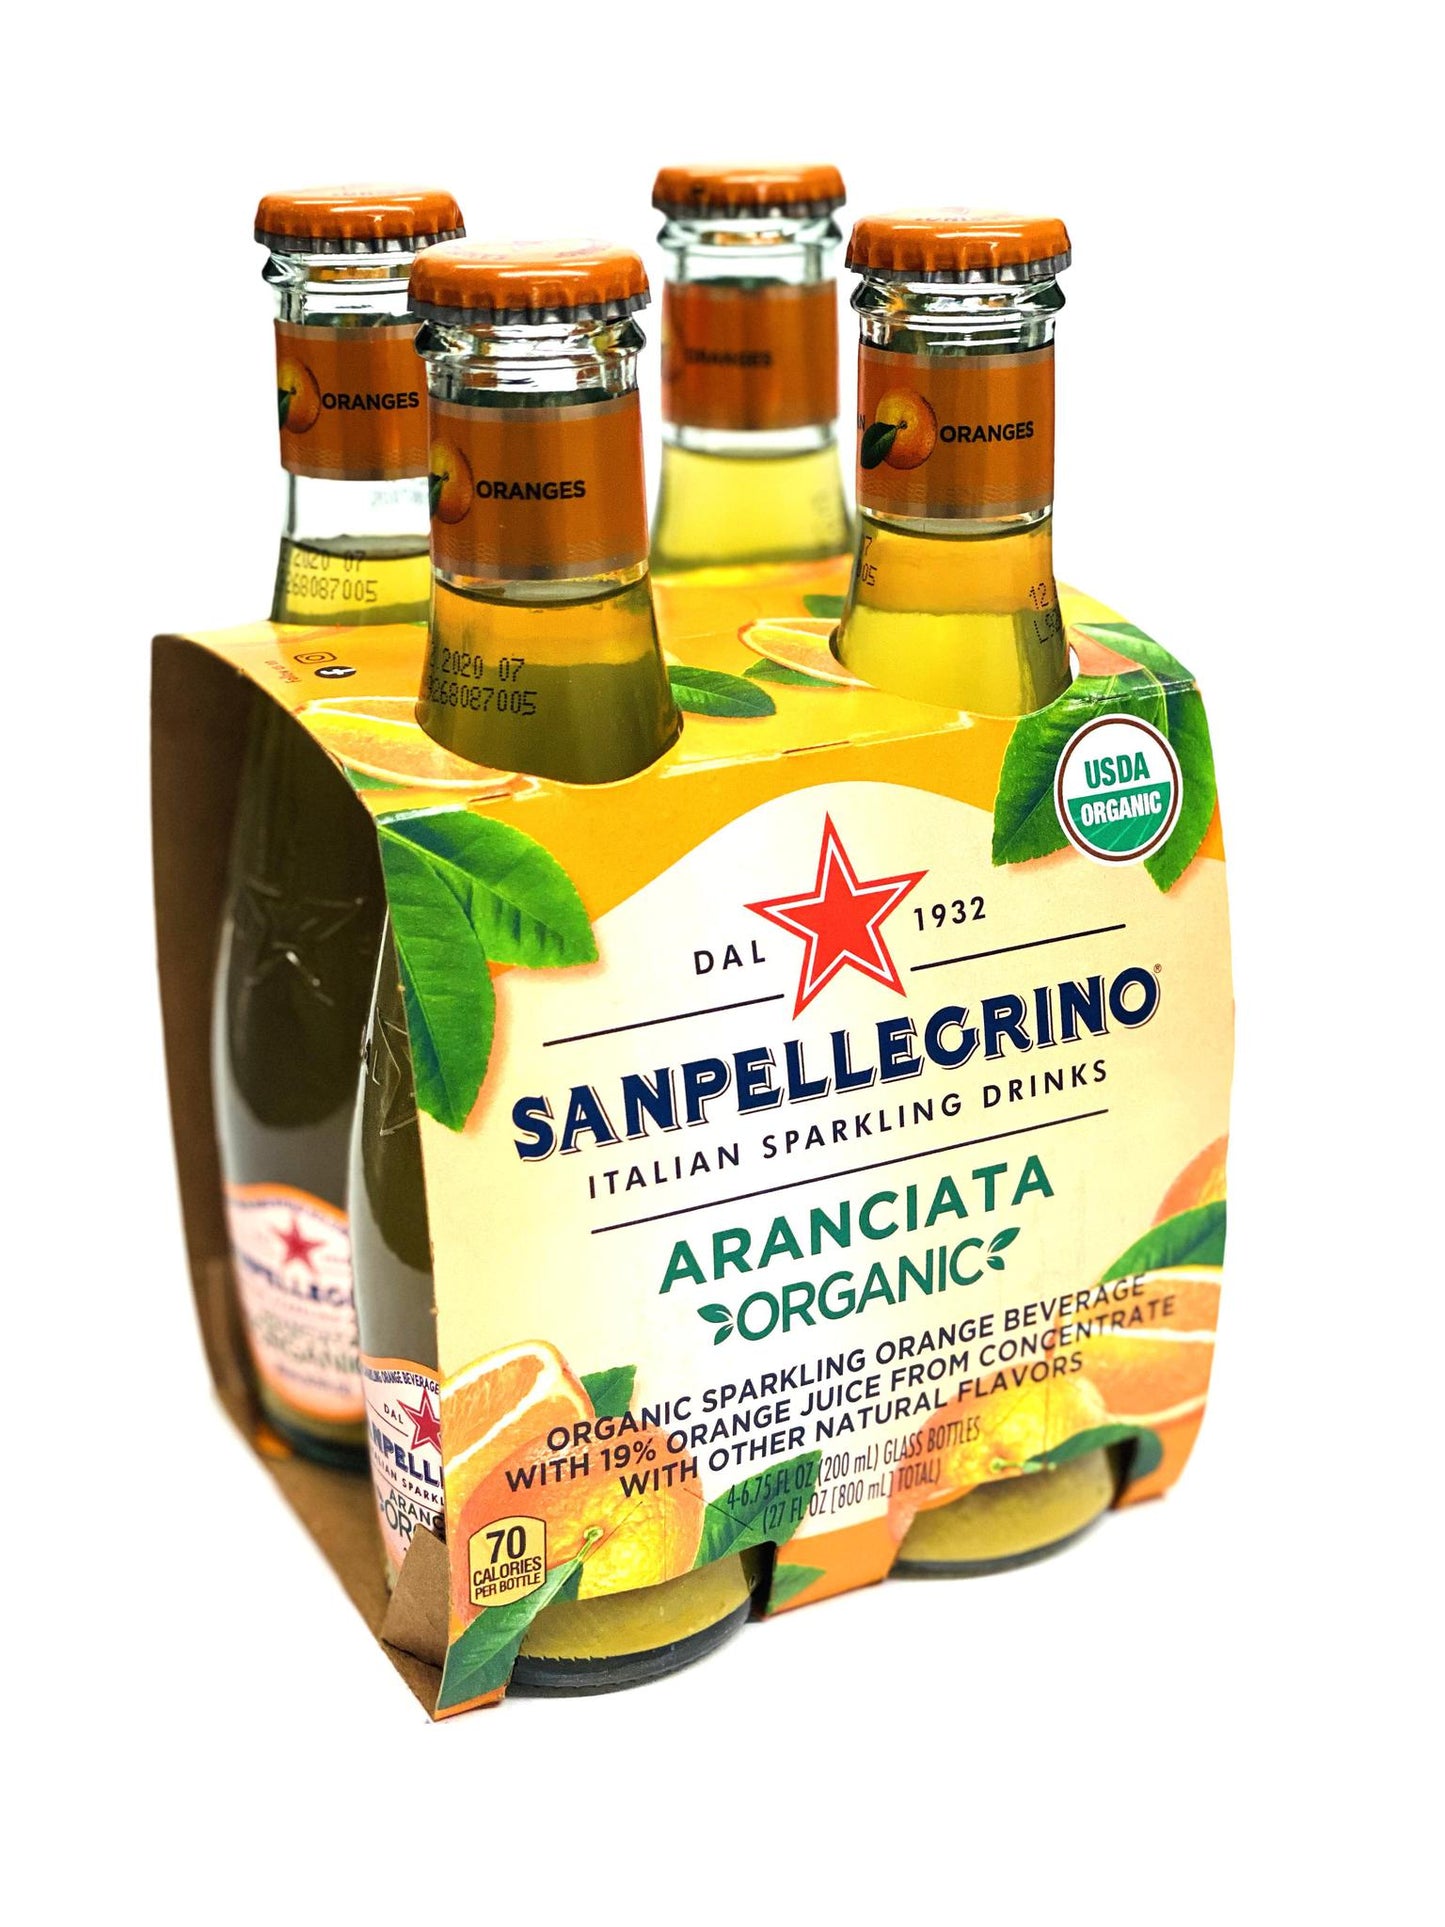 Sanpellegrino Aranciata Organic Glass Bottles, 6.25 fl oz